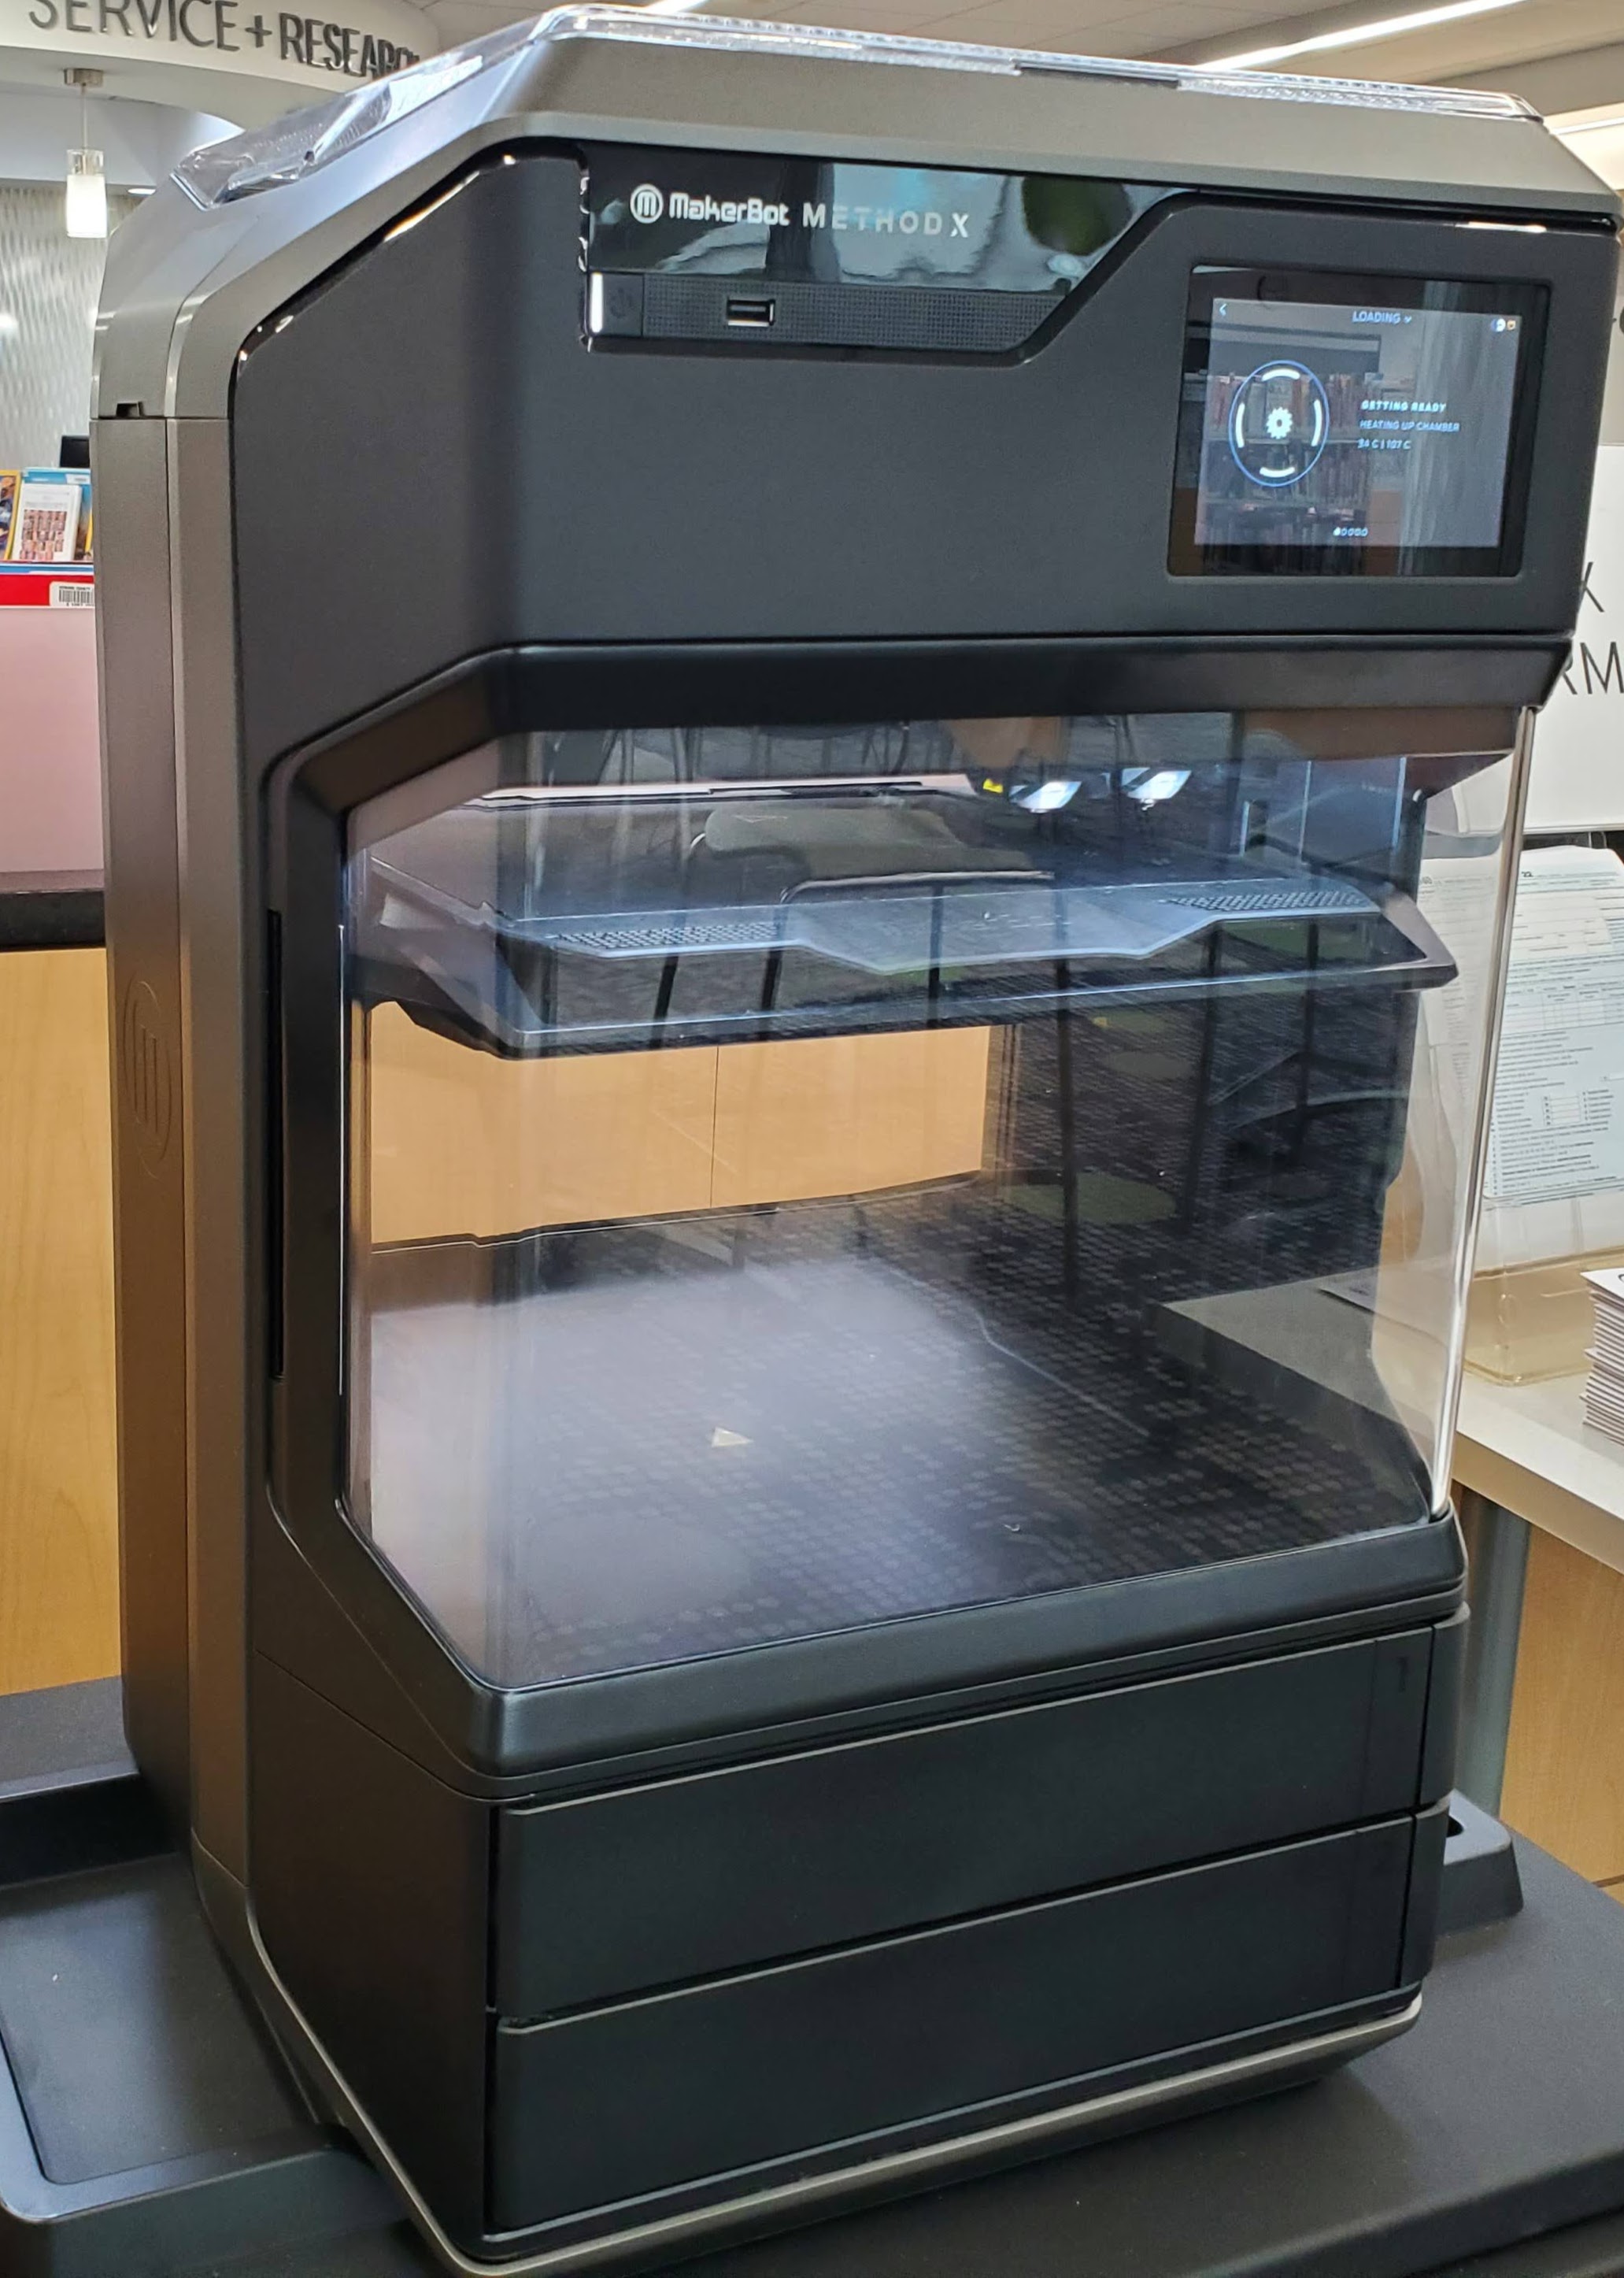 a makerbot method x 3D printer